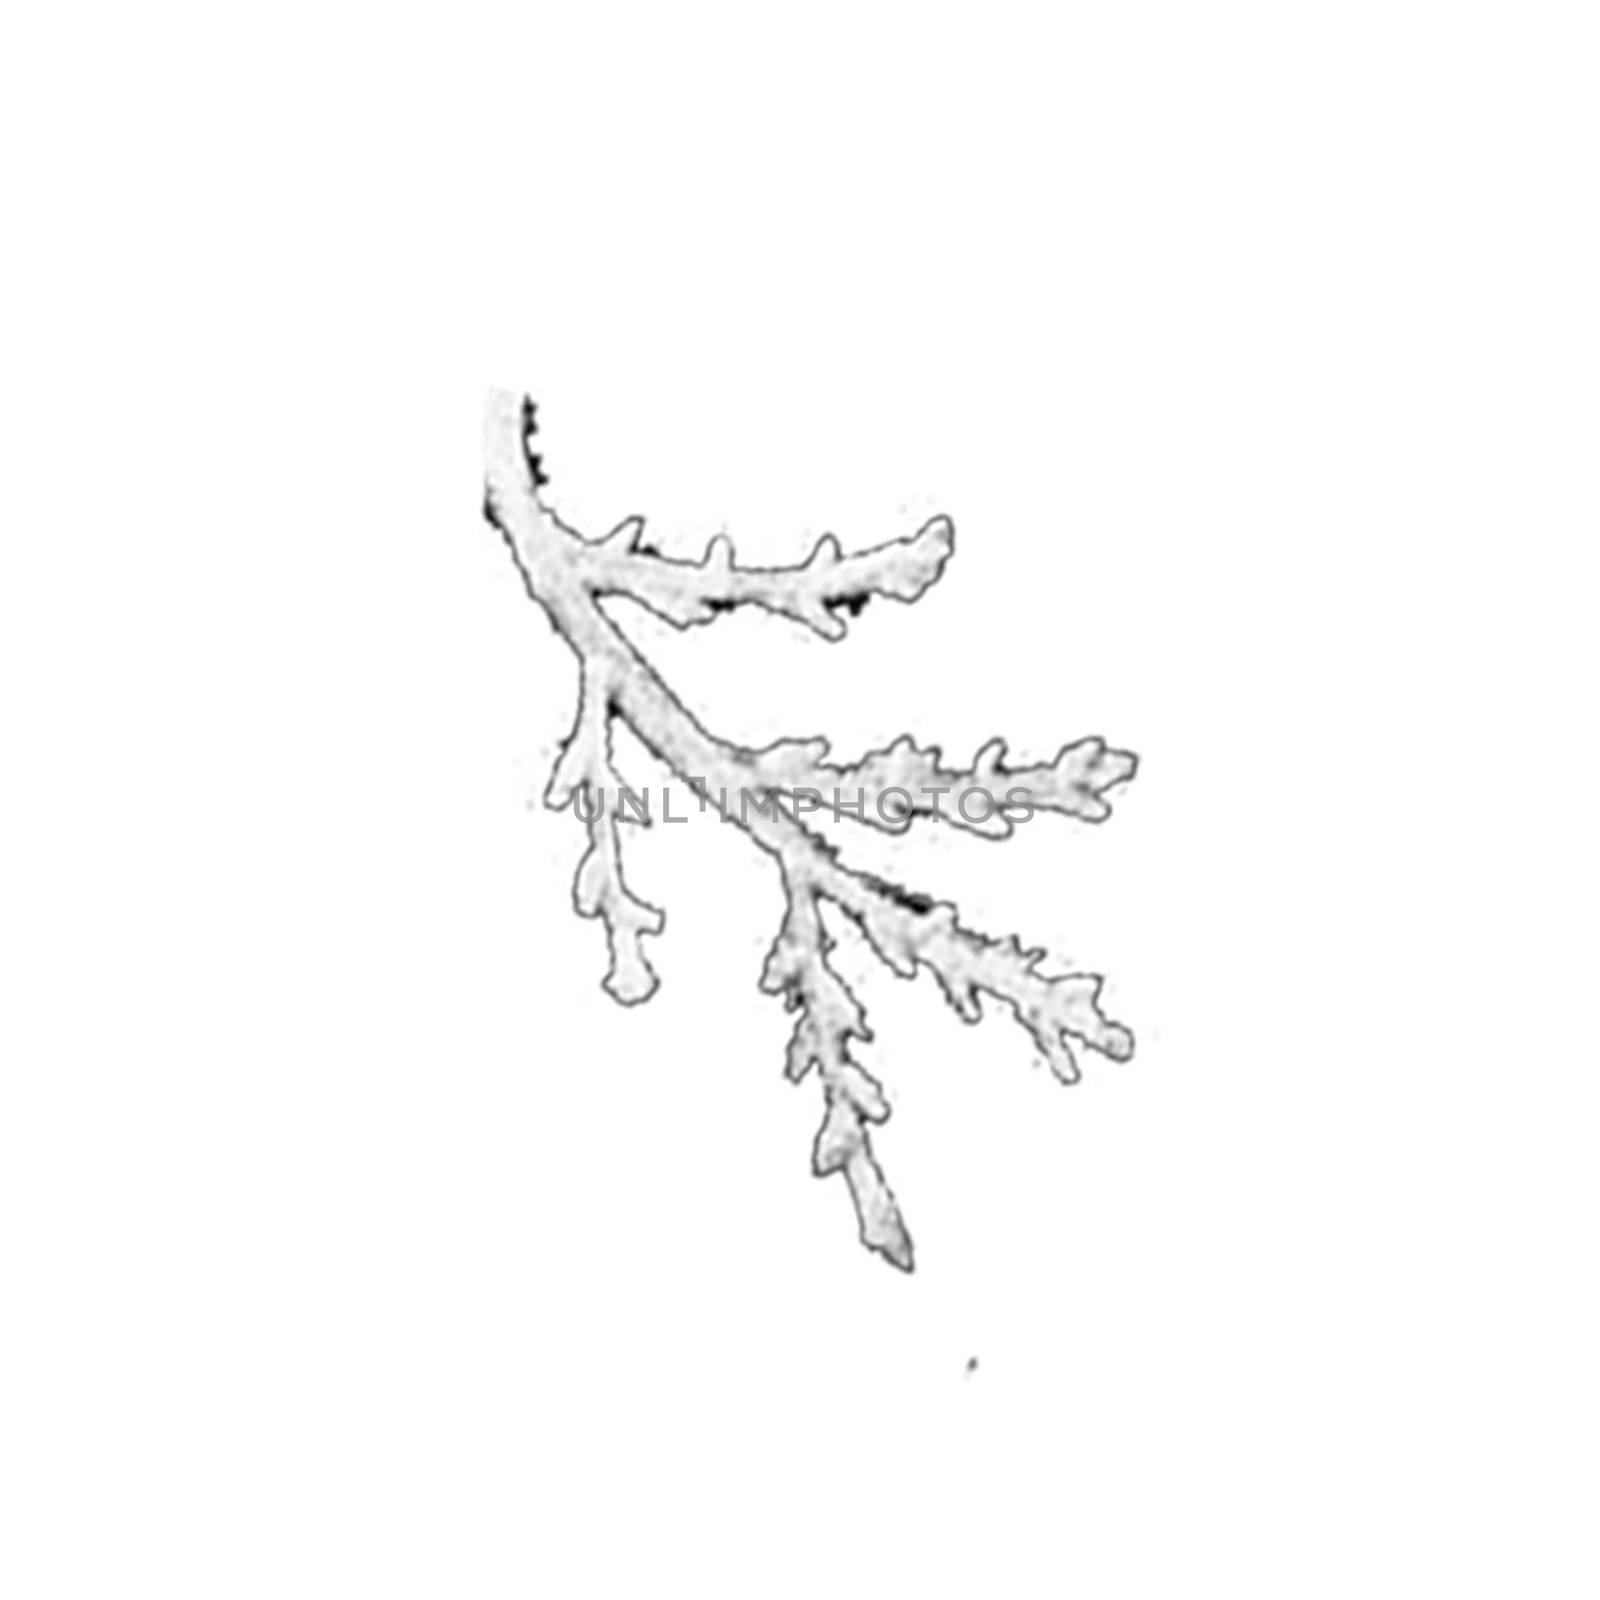 Black and White Hand-Drawn Flower Twig. Thin-leaved Marigolds Sketch. by Rina_Dozornaya